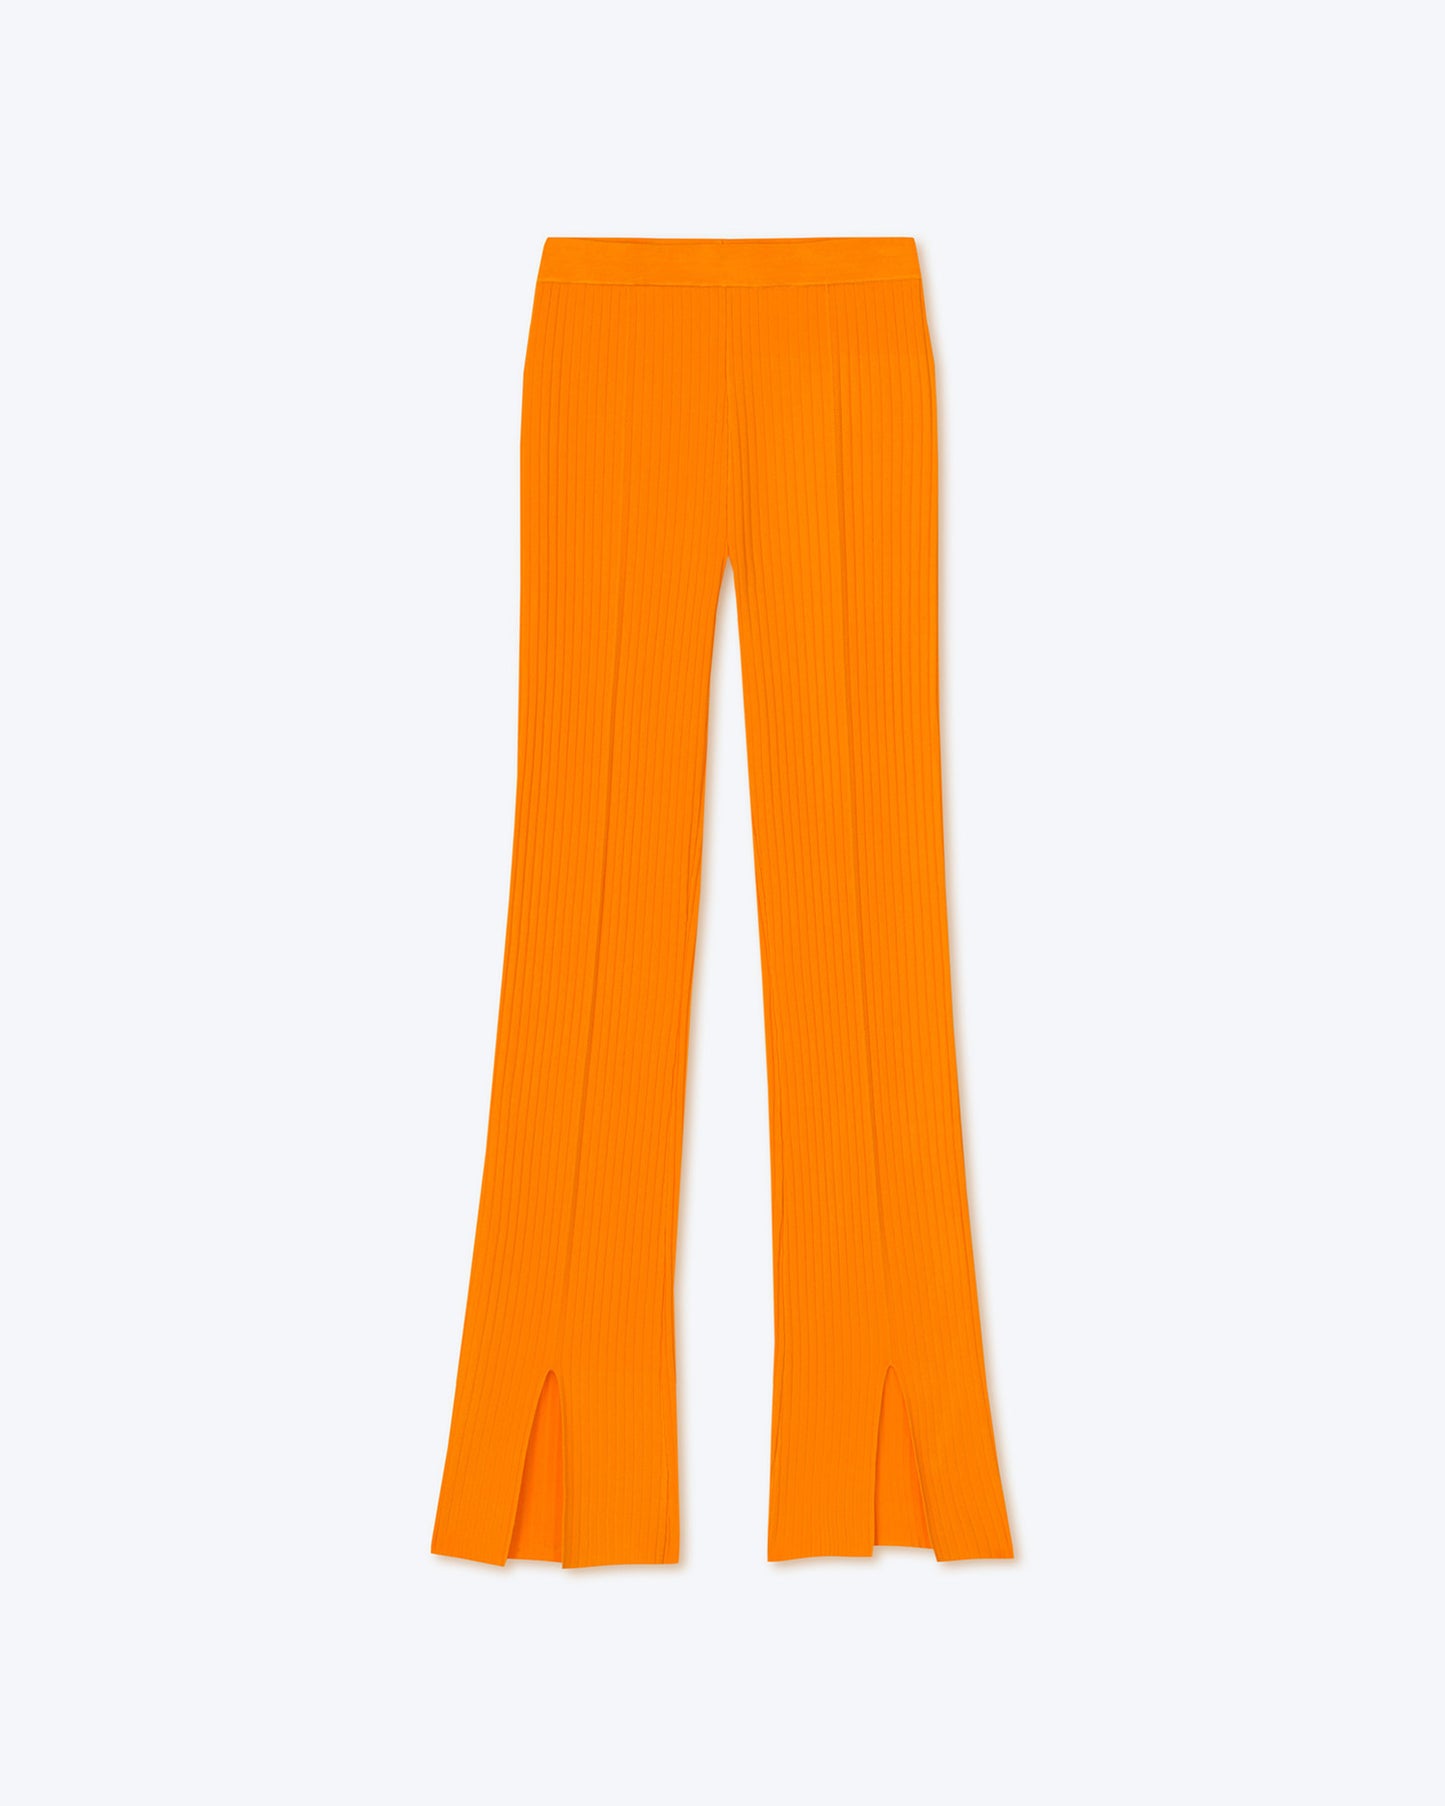 Lette - Viscose Rib Pants - Bright Orange